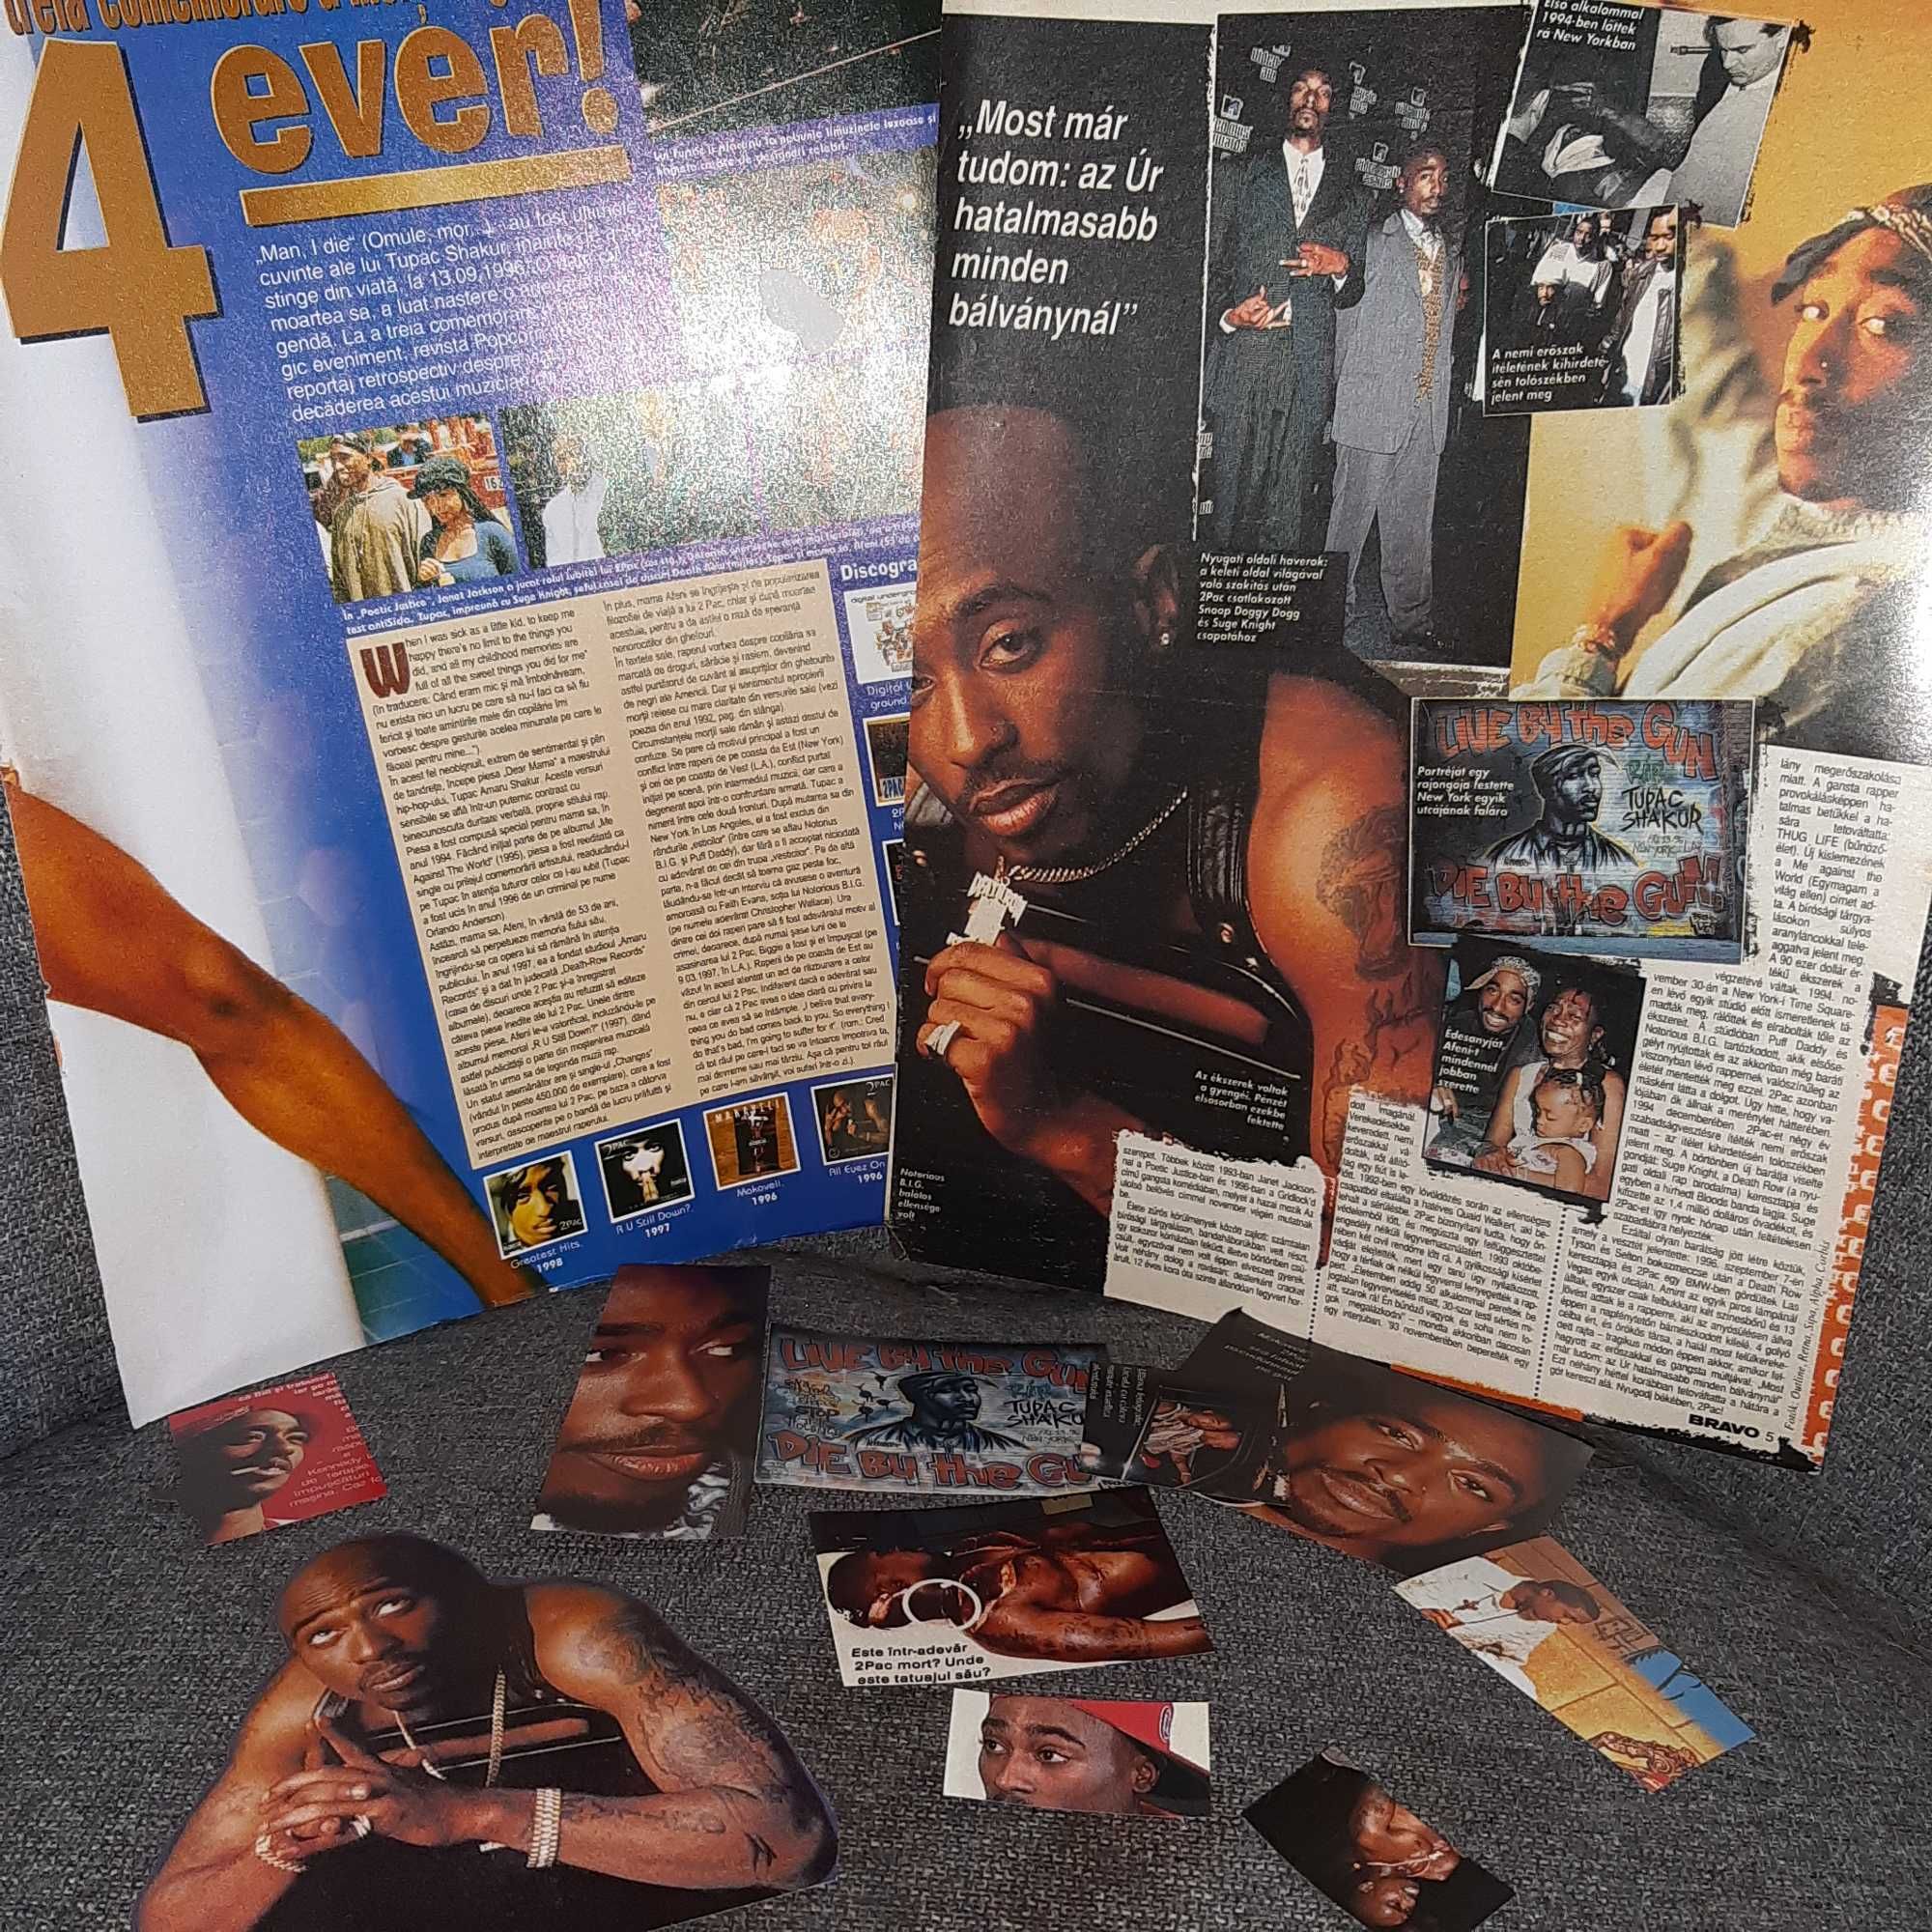 Colectie de articole cu 2Pac/Tupac